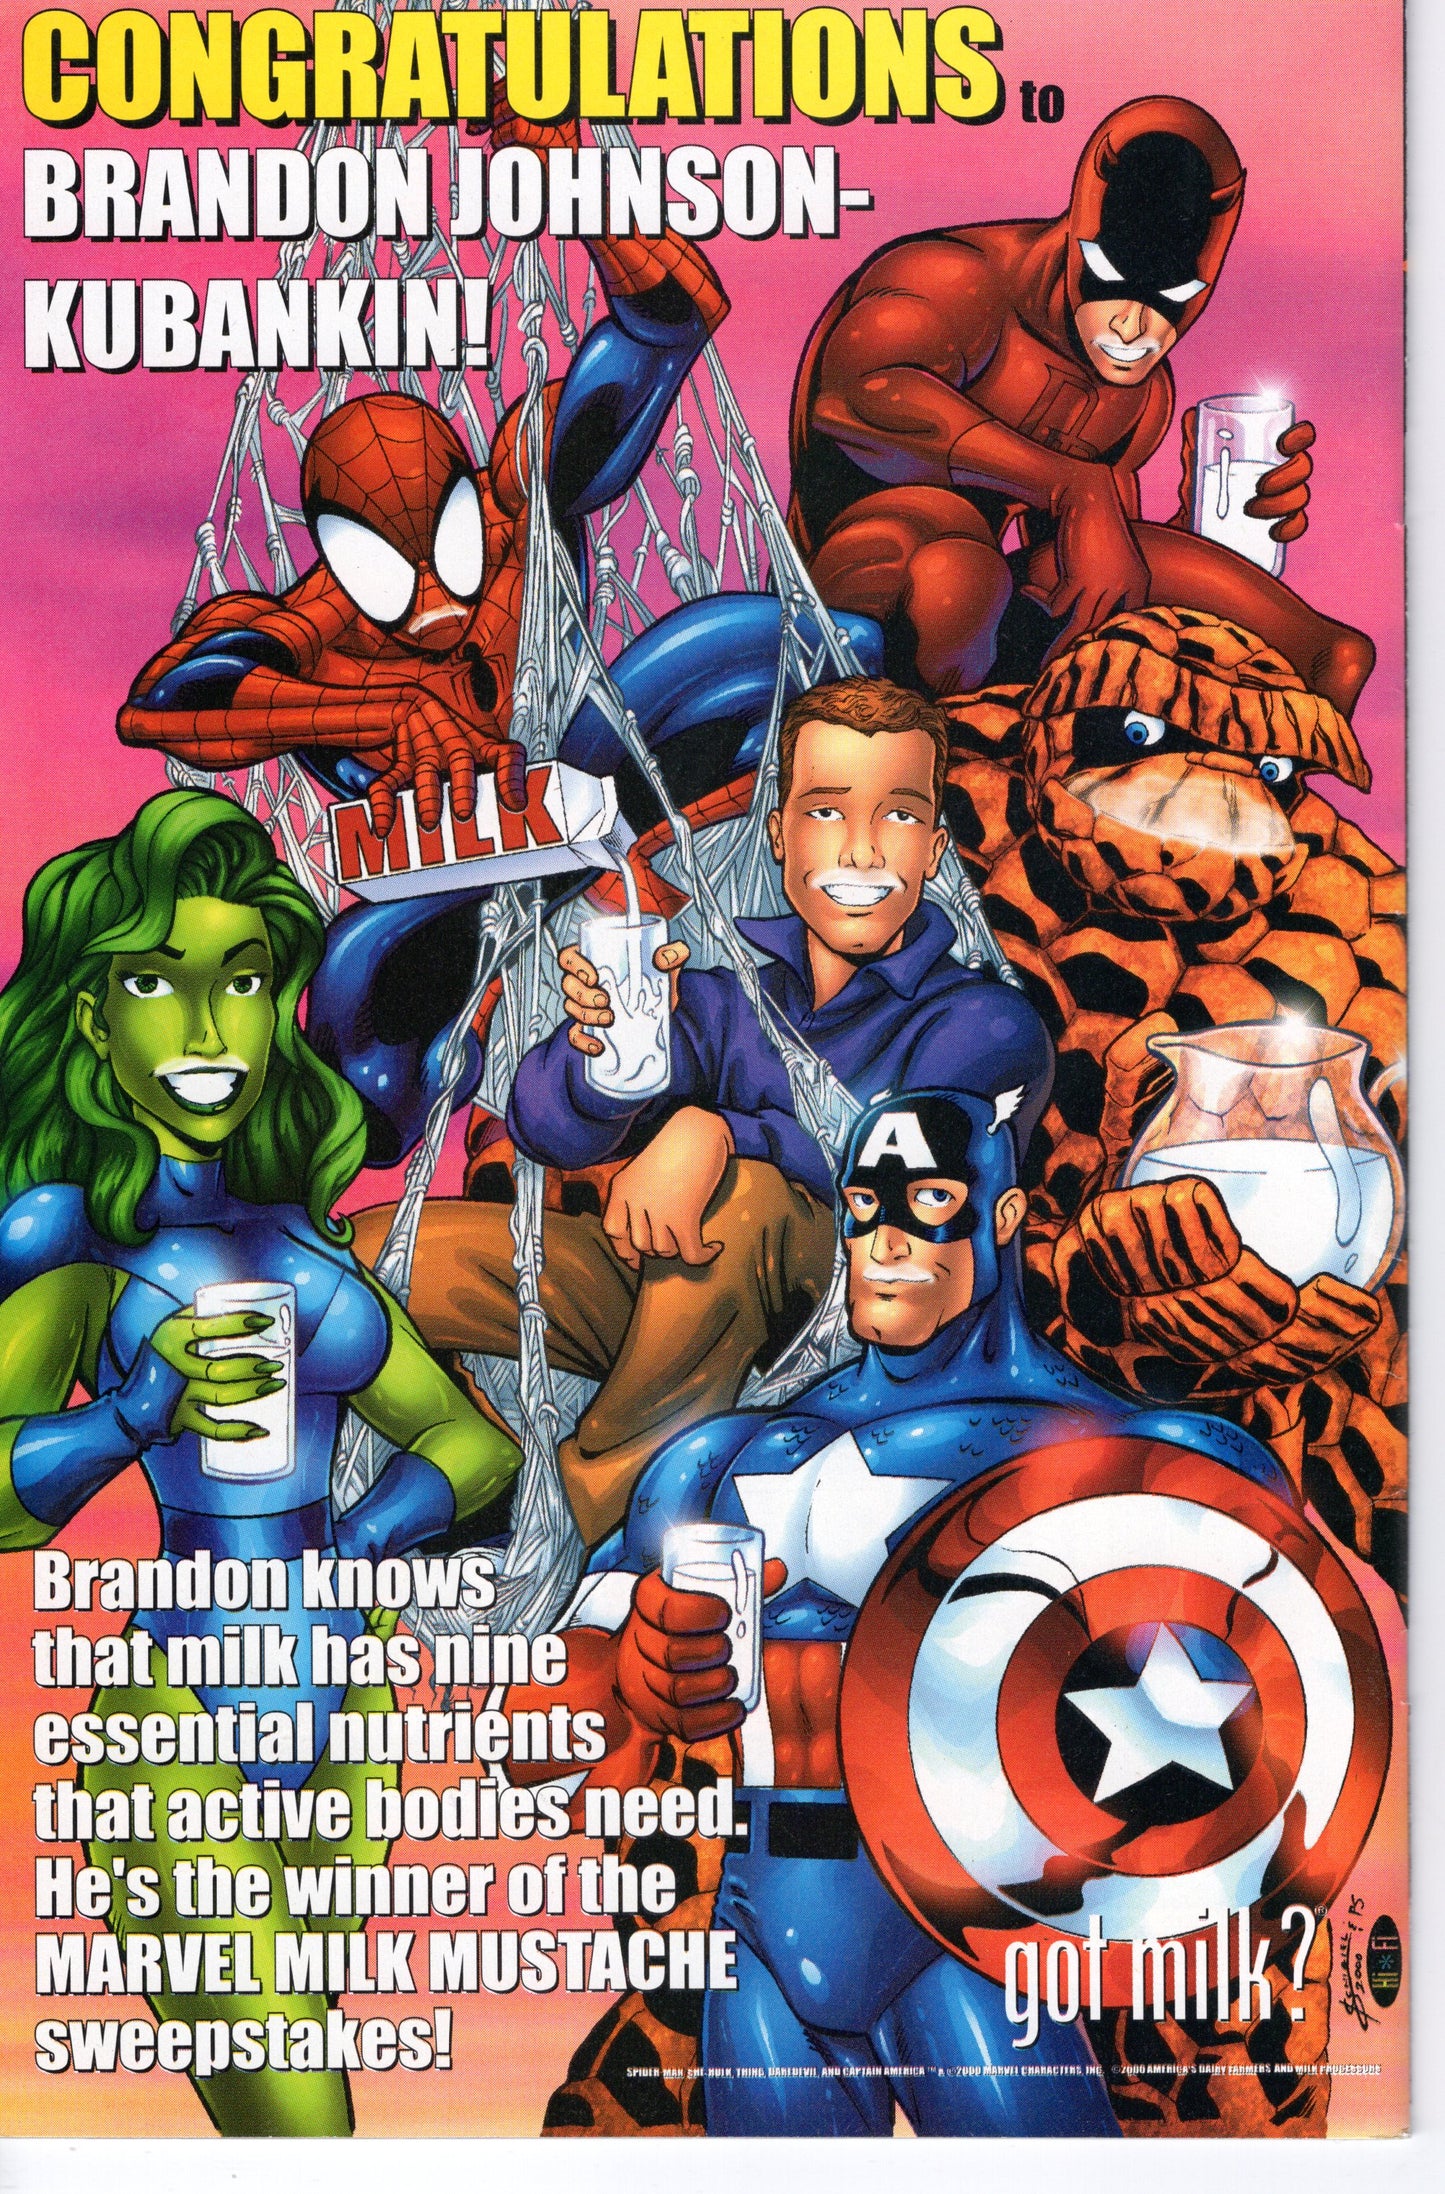 X-Men "Giant Sized Special" Issue #106 (Nov. 2000 - Marvel Comics) VF/FN